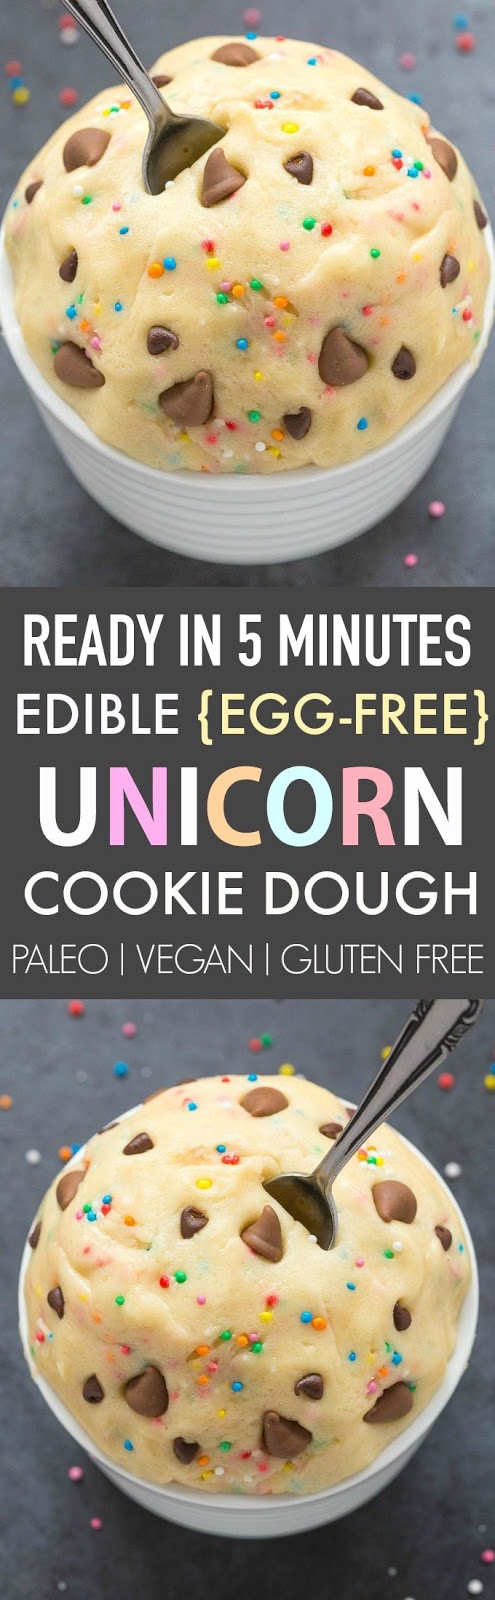 No Bake Edible and Egg-free Unicorn Cookie Dough